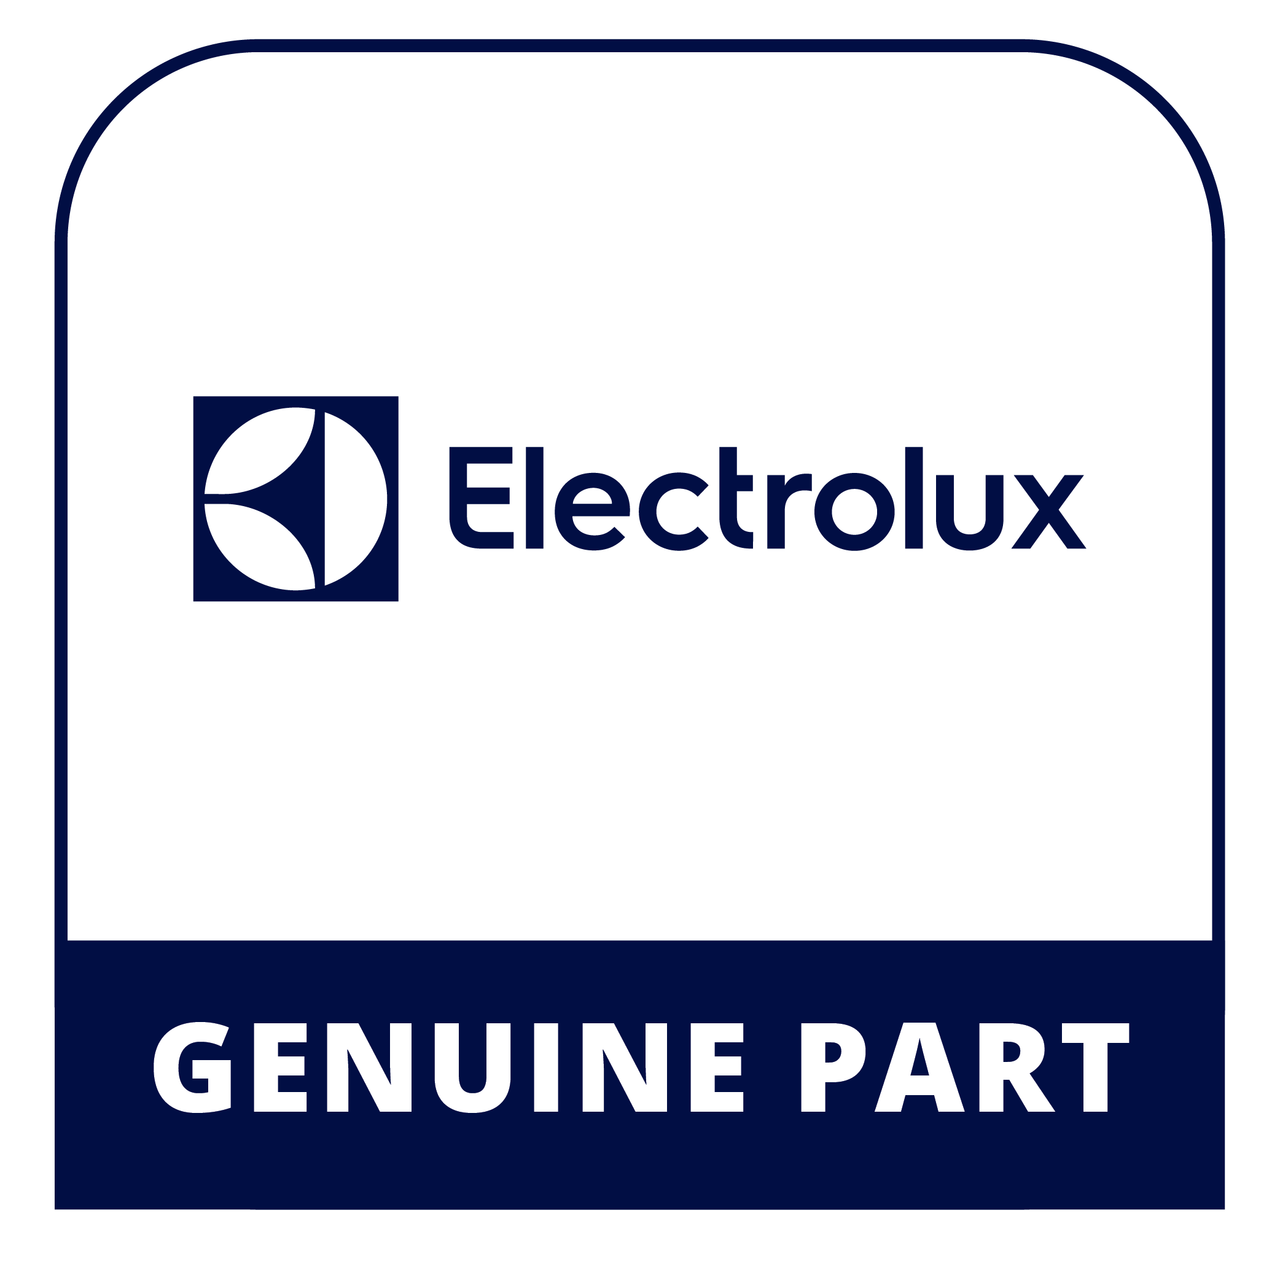 Frigidaire - Electrolux 318295313 Panel - Genuine Electrolux Part